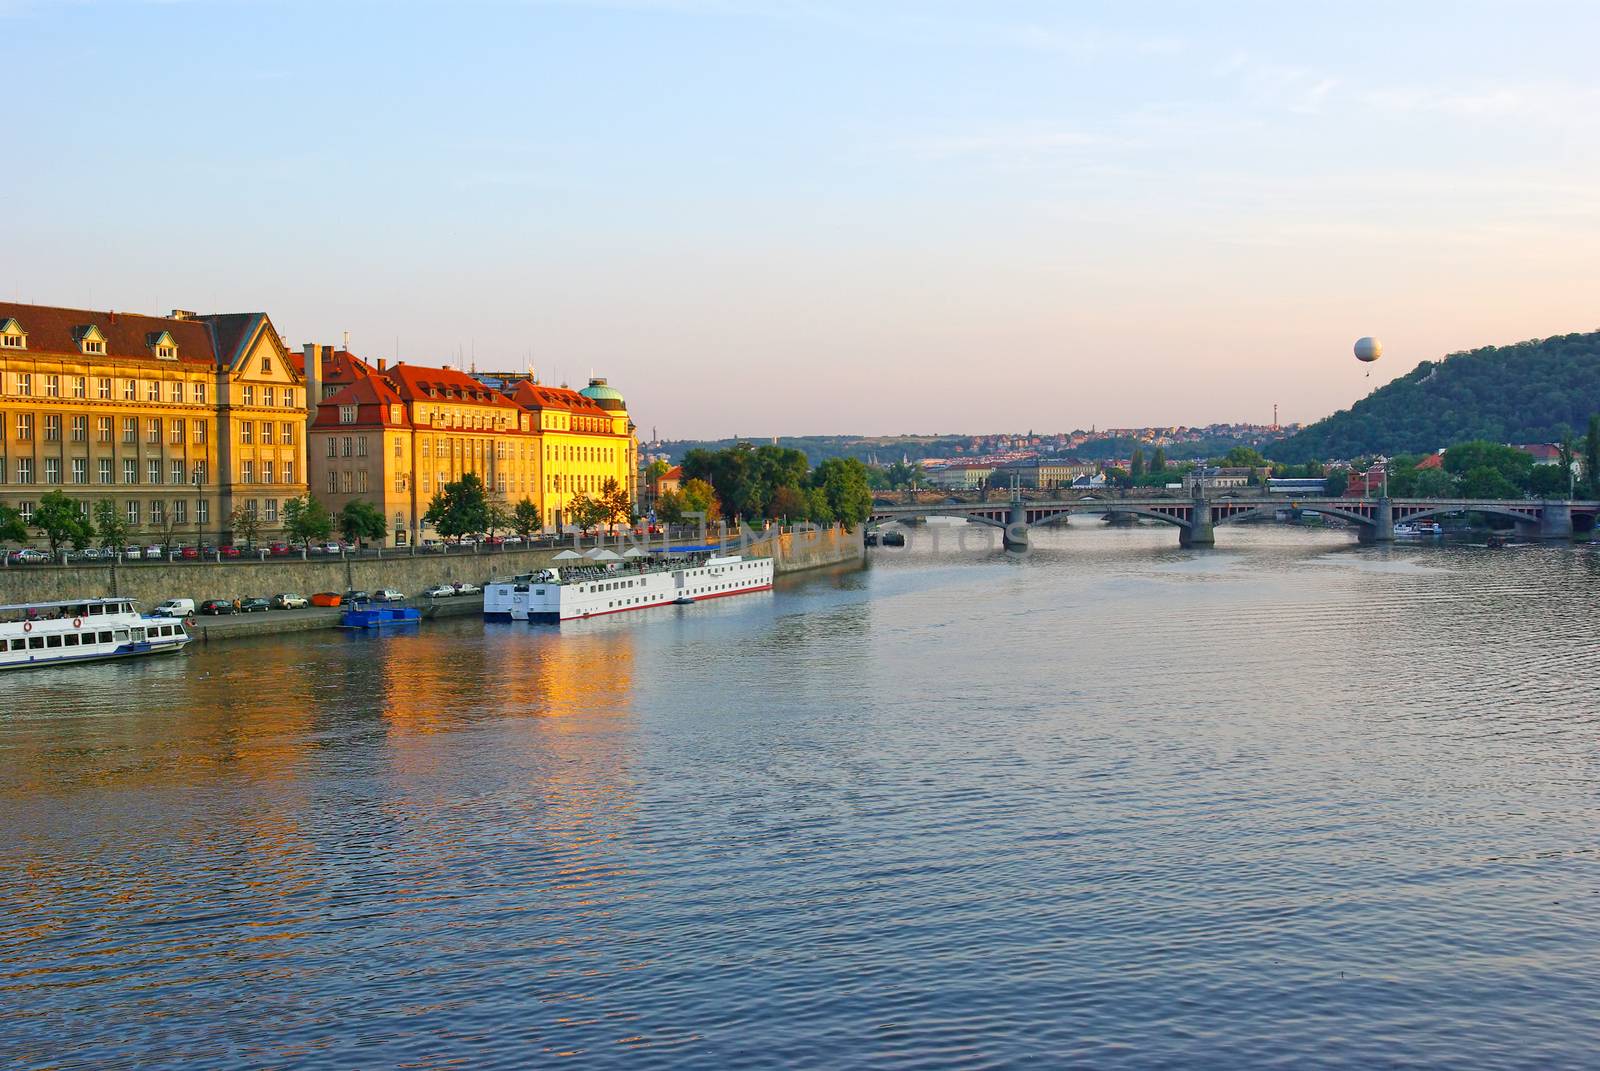 Vltava river viewed from Cech bridge in Prague, summer landscape